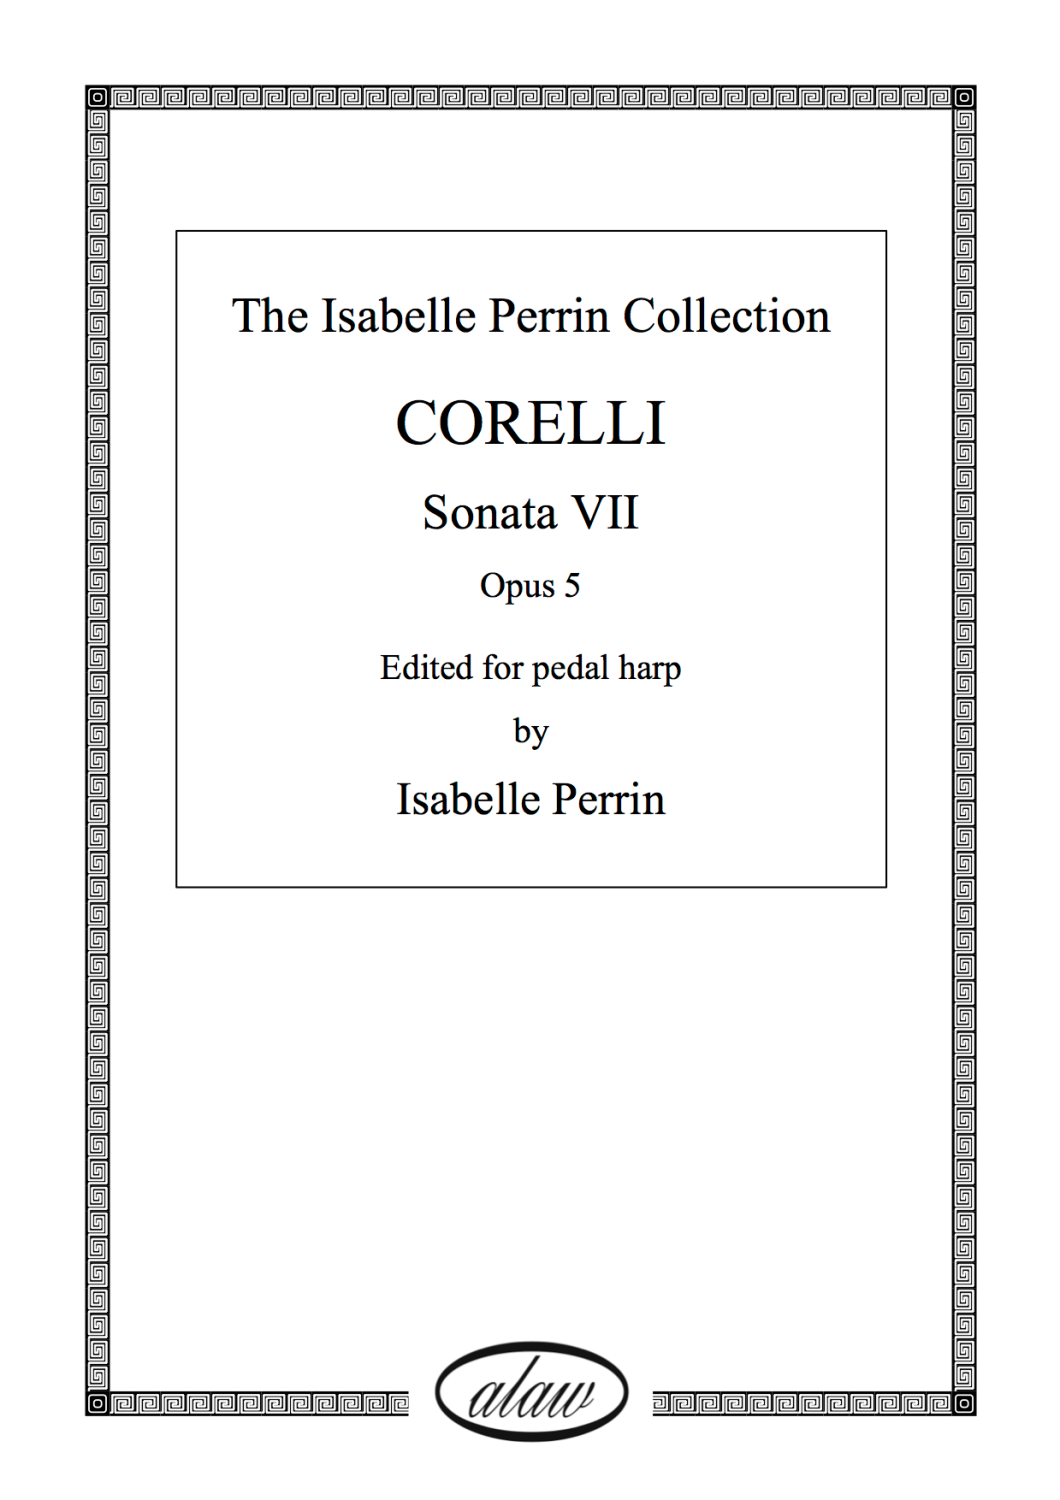 Sonata VII, opus 5 - ARCANGELO CORELLI (1653-1713)